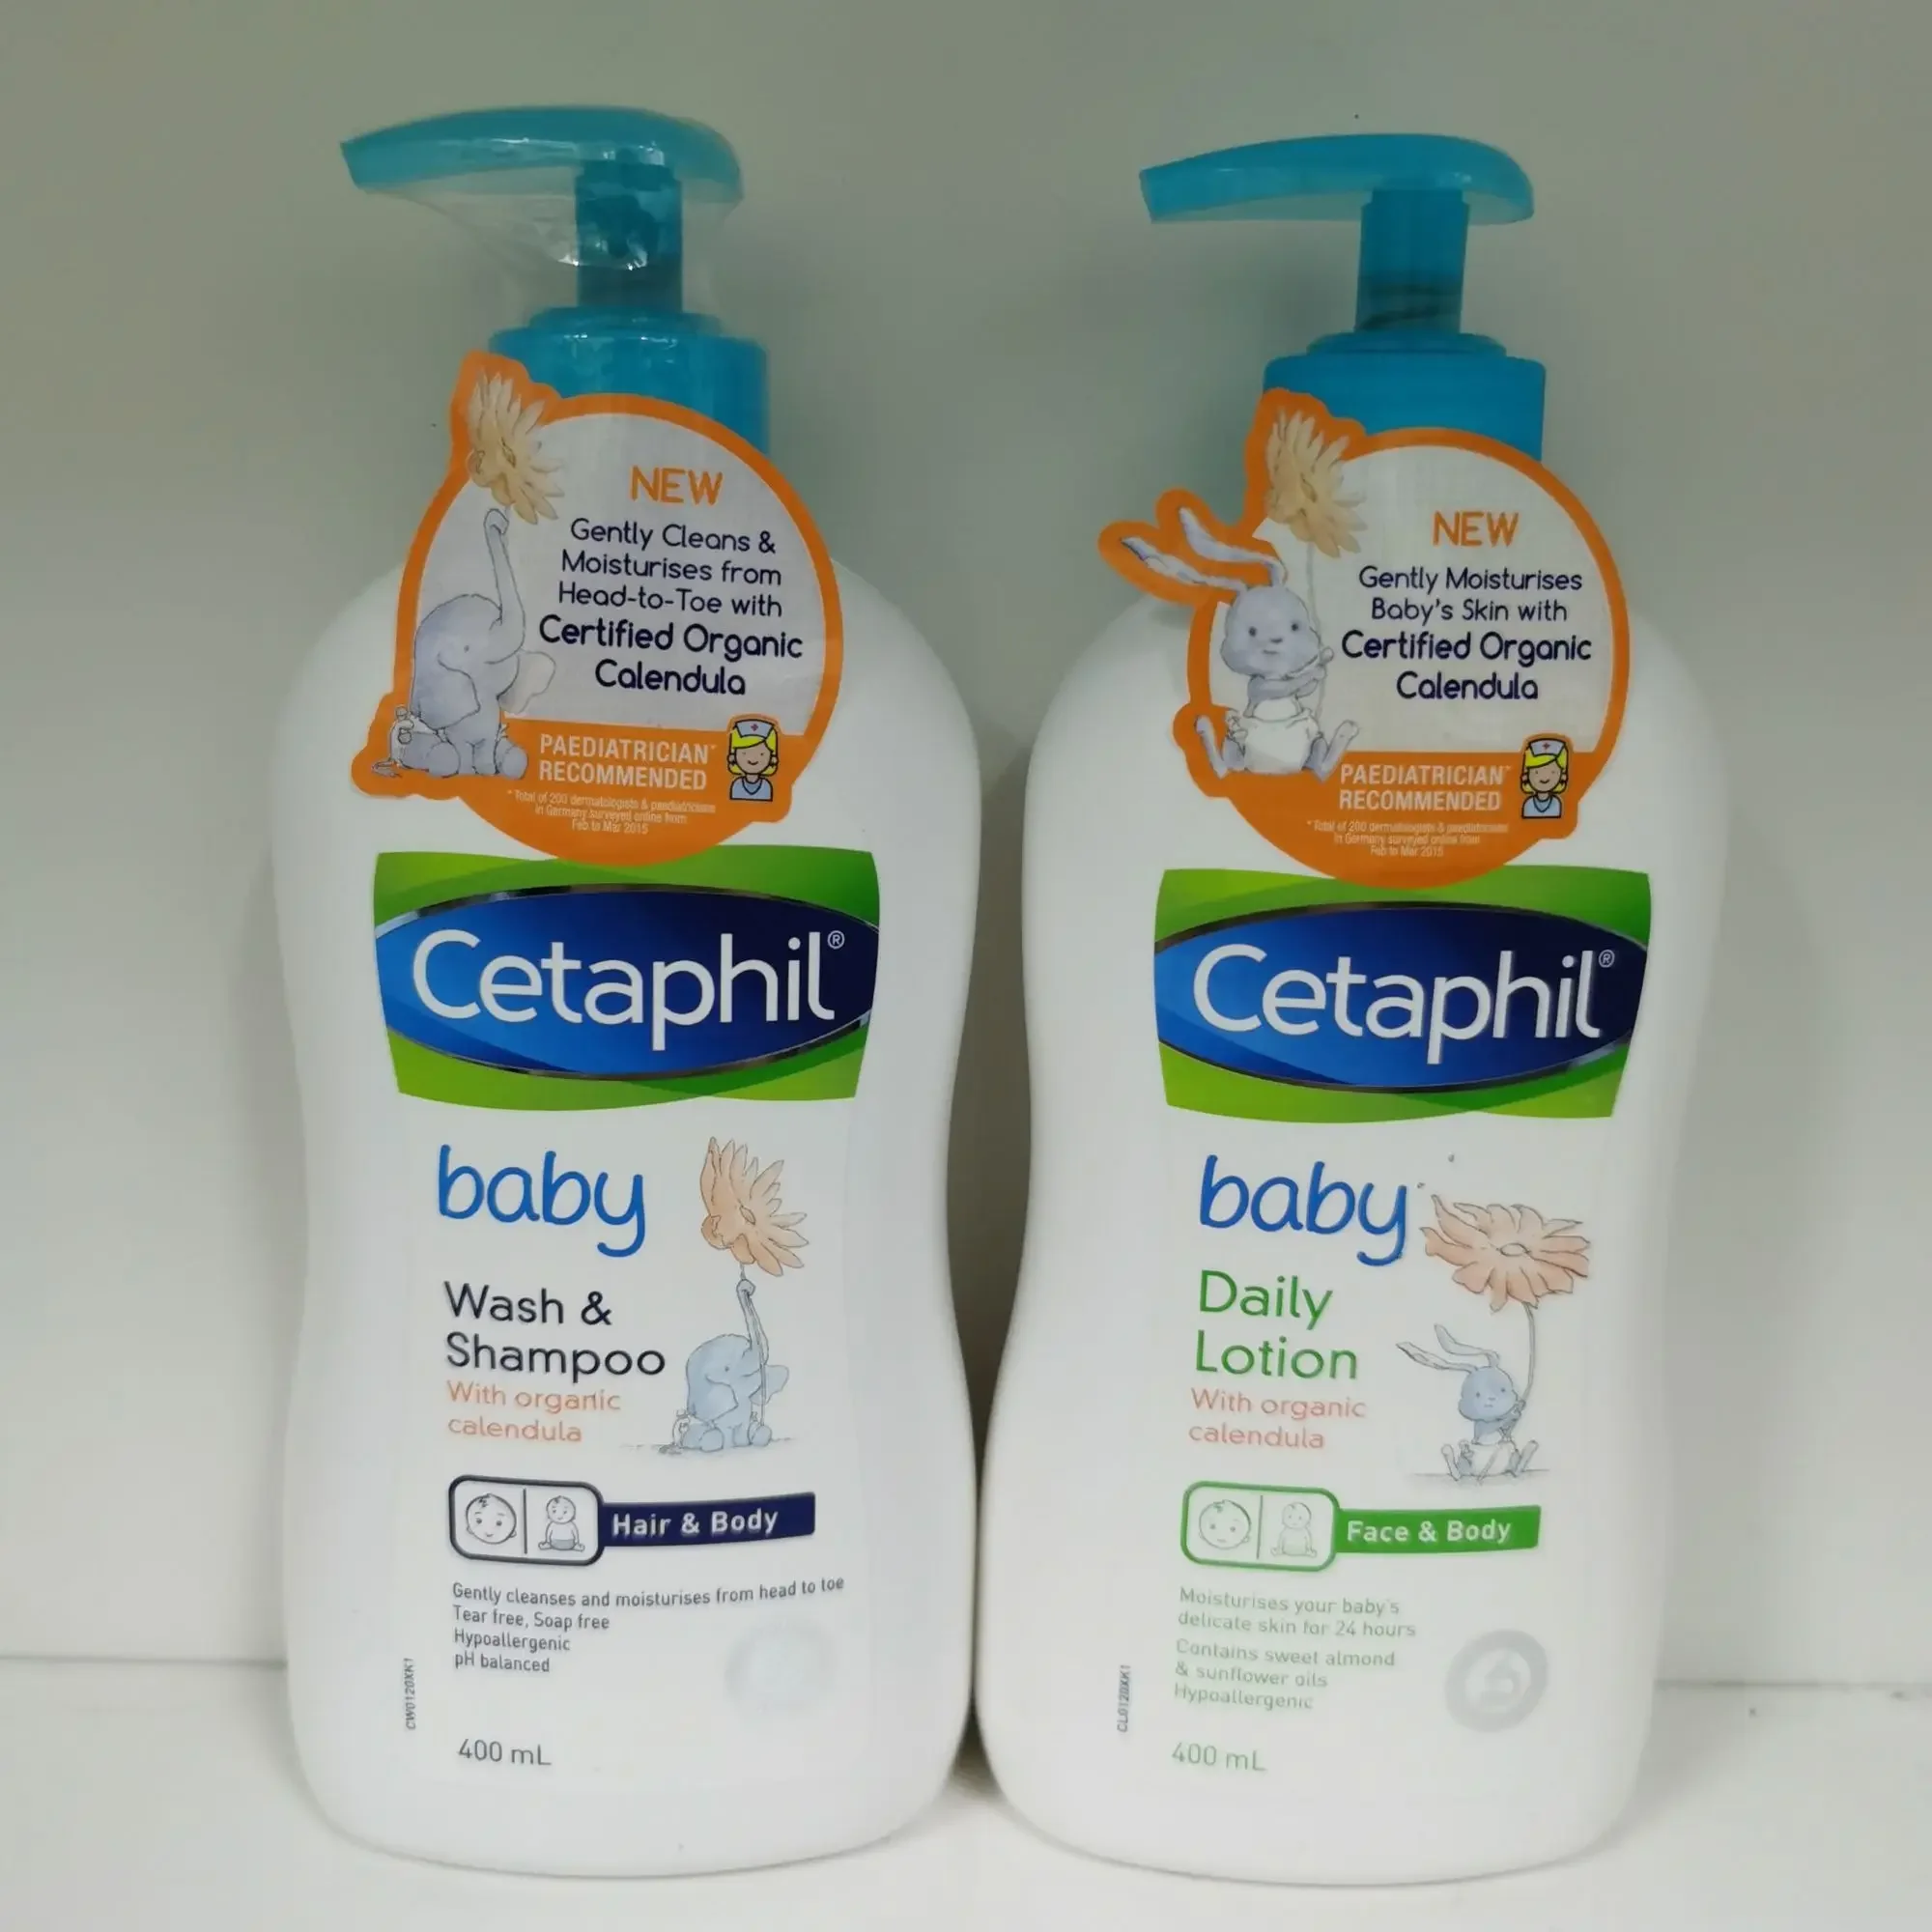 Cetaphil Baby Care Calendula Wash & Shampoo / Daily Lotion